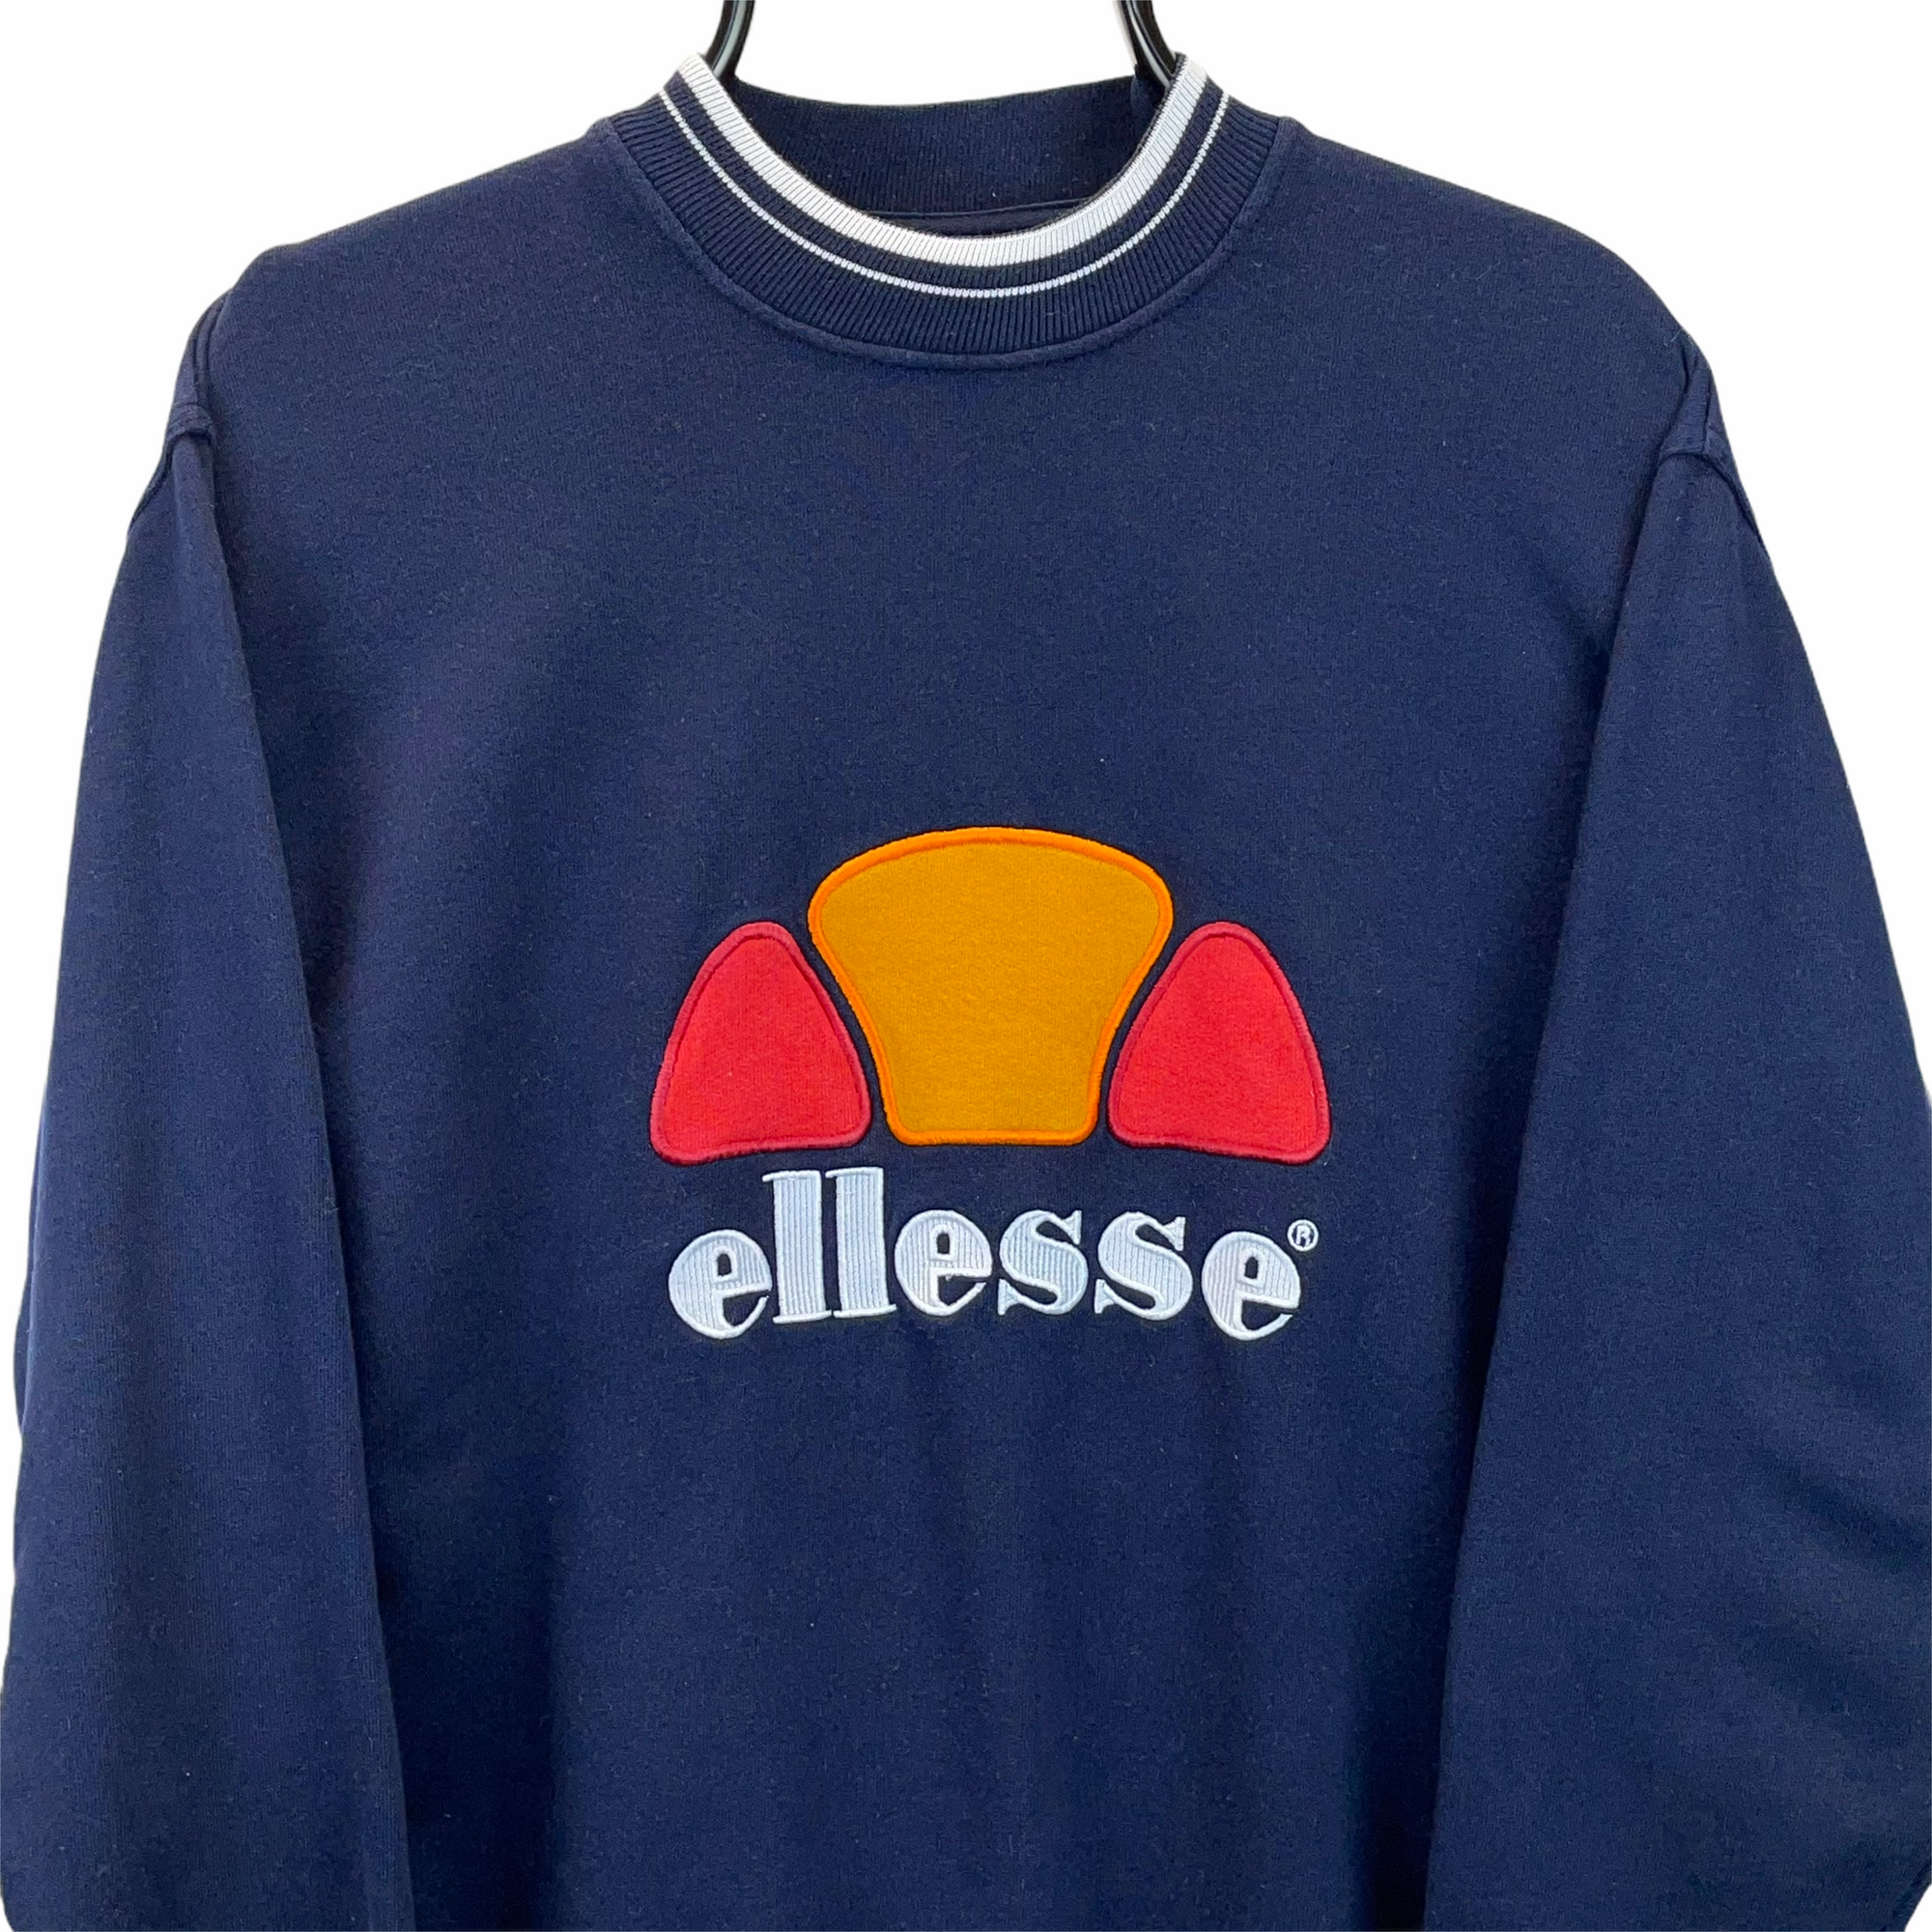 Vintage Ellesse Spellout Sweatshirt in Navy - Men's Medium/Women's Large